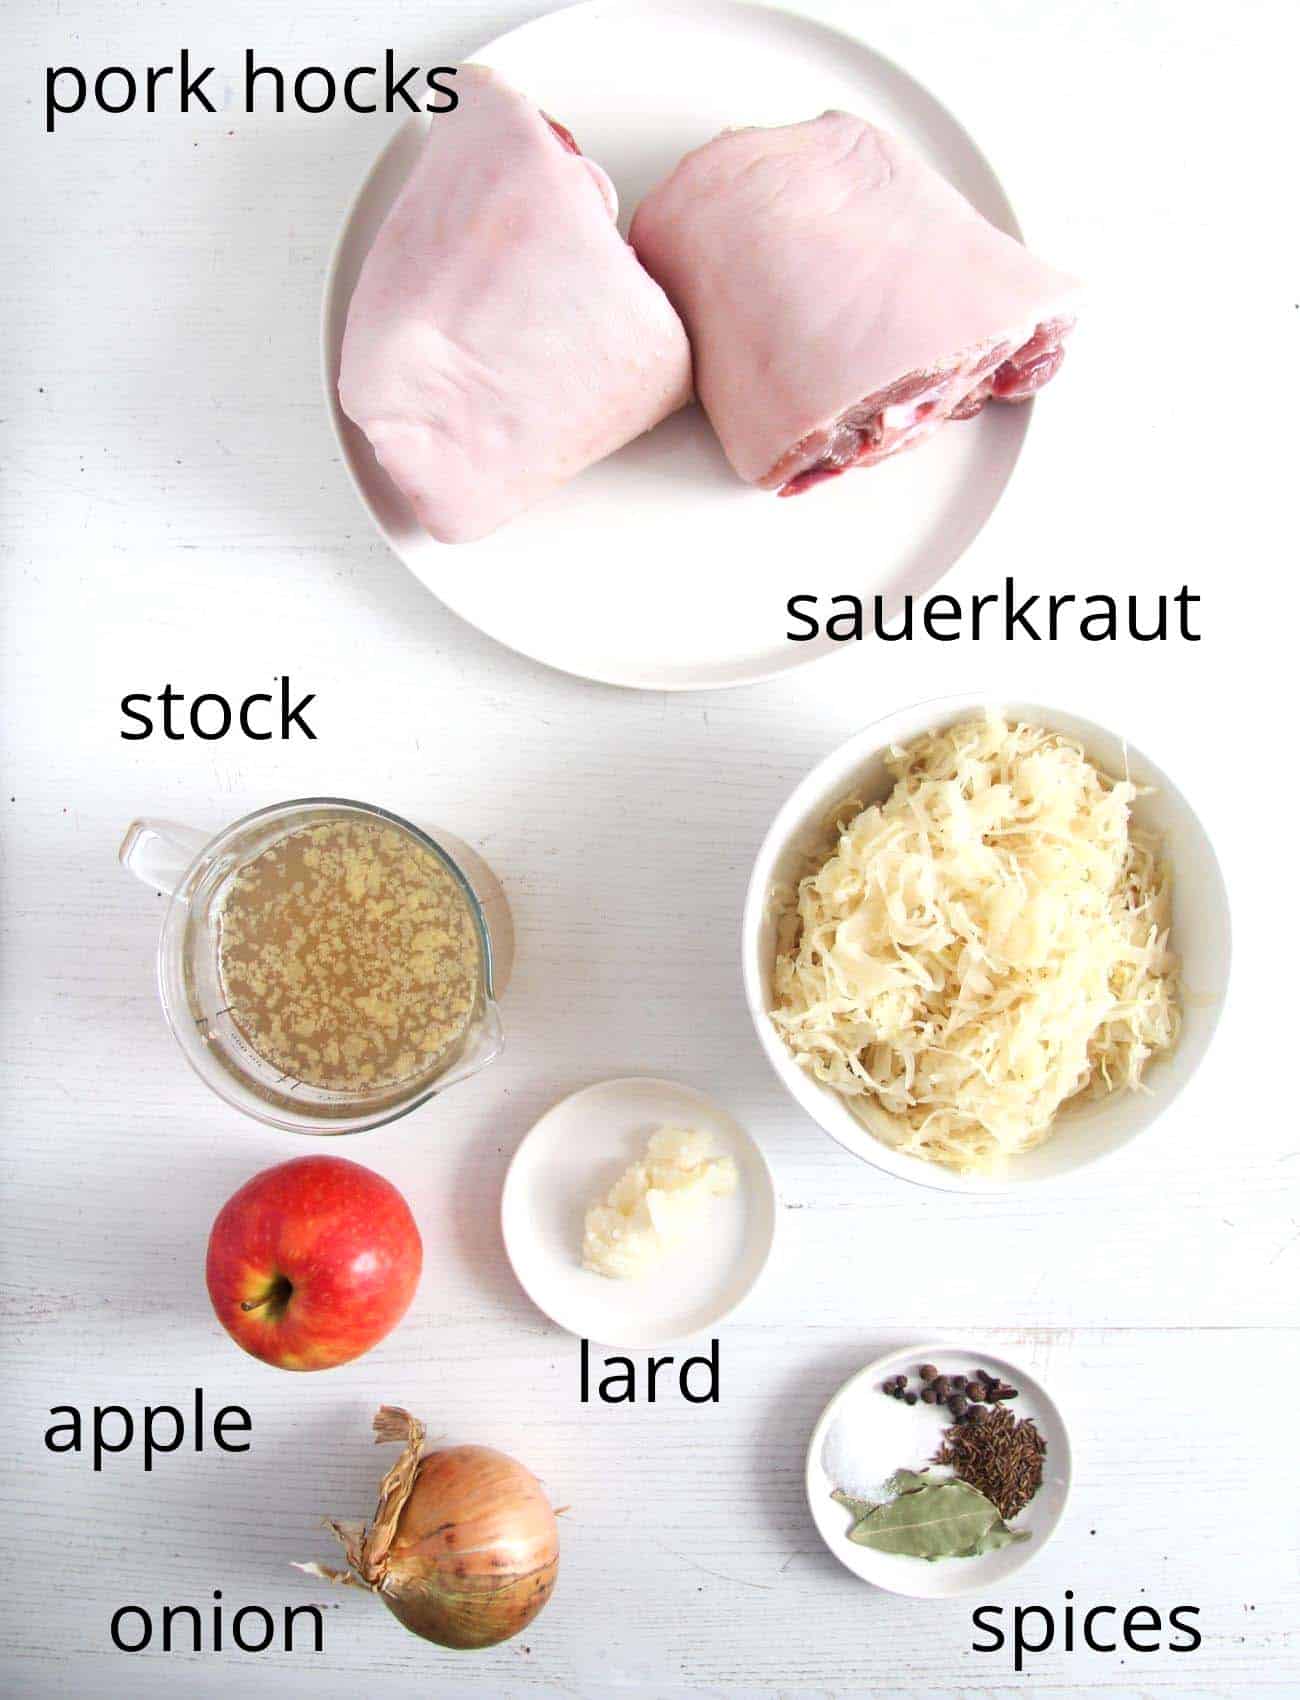 ingredients for cooking knuckles. two pork hocks, sauerkraut, stock, apple, lard, spices, onion.